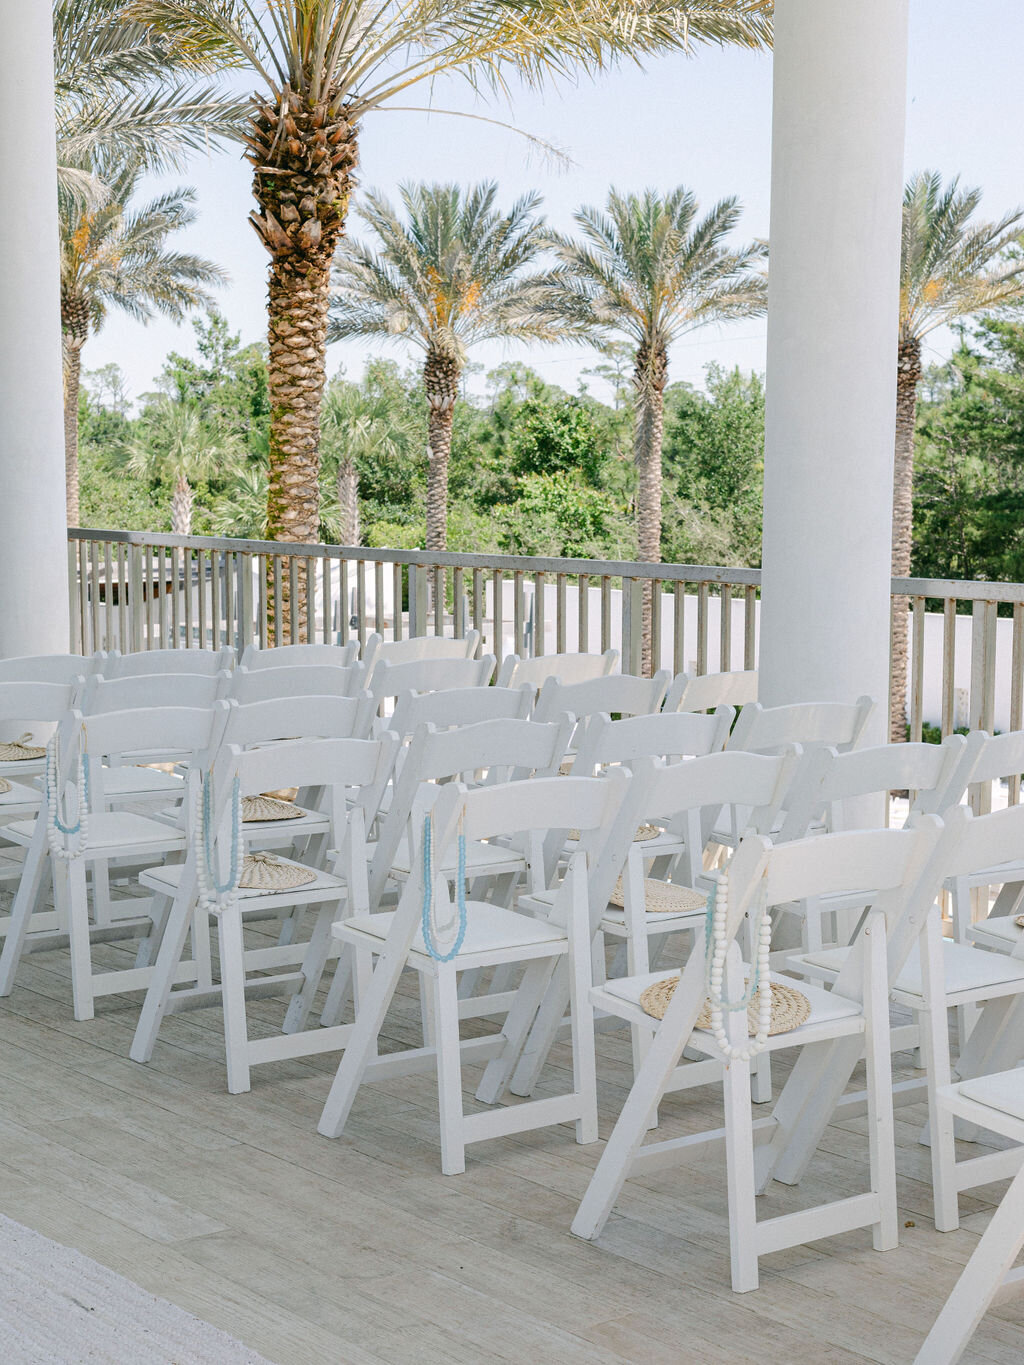 Wedding ceremony chairs at Rosemary Beach destination wedding